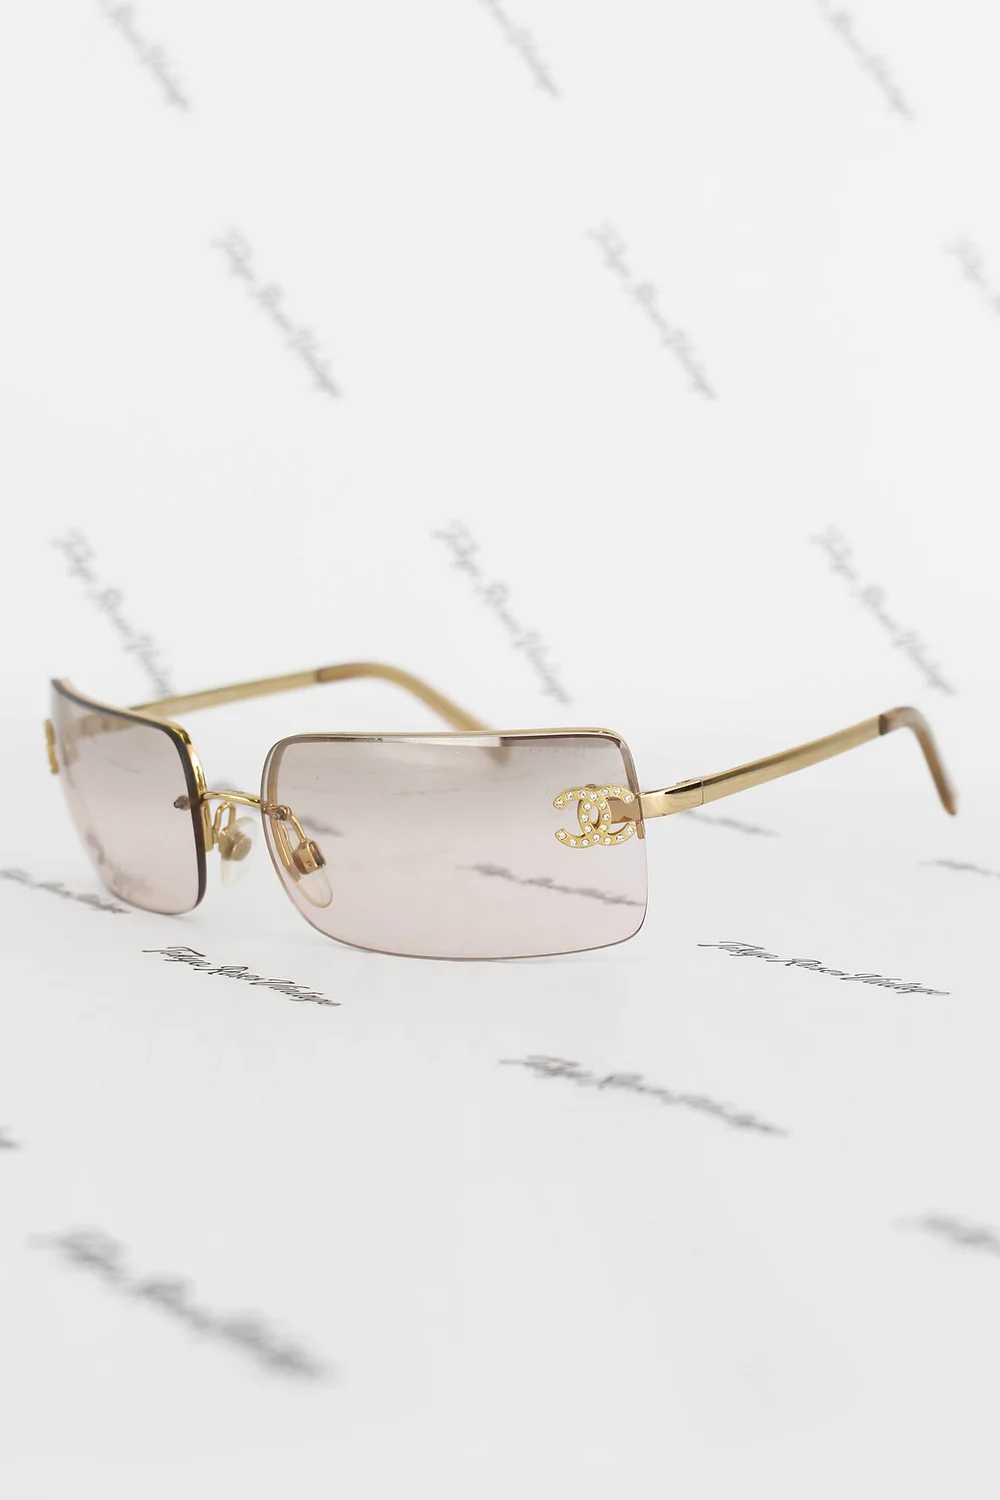 Vintage Chanel Light Brown Tinted Sunglasses Rhin… - image 2